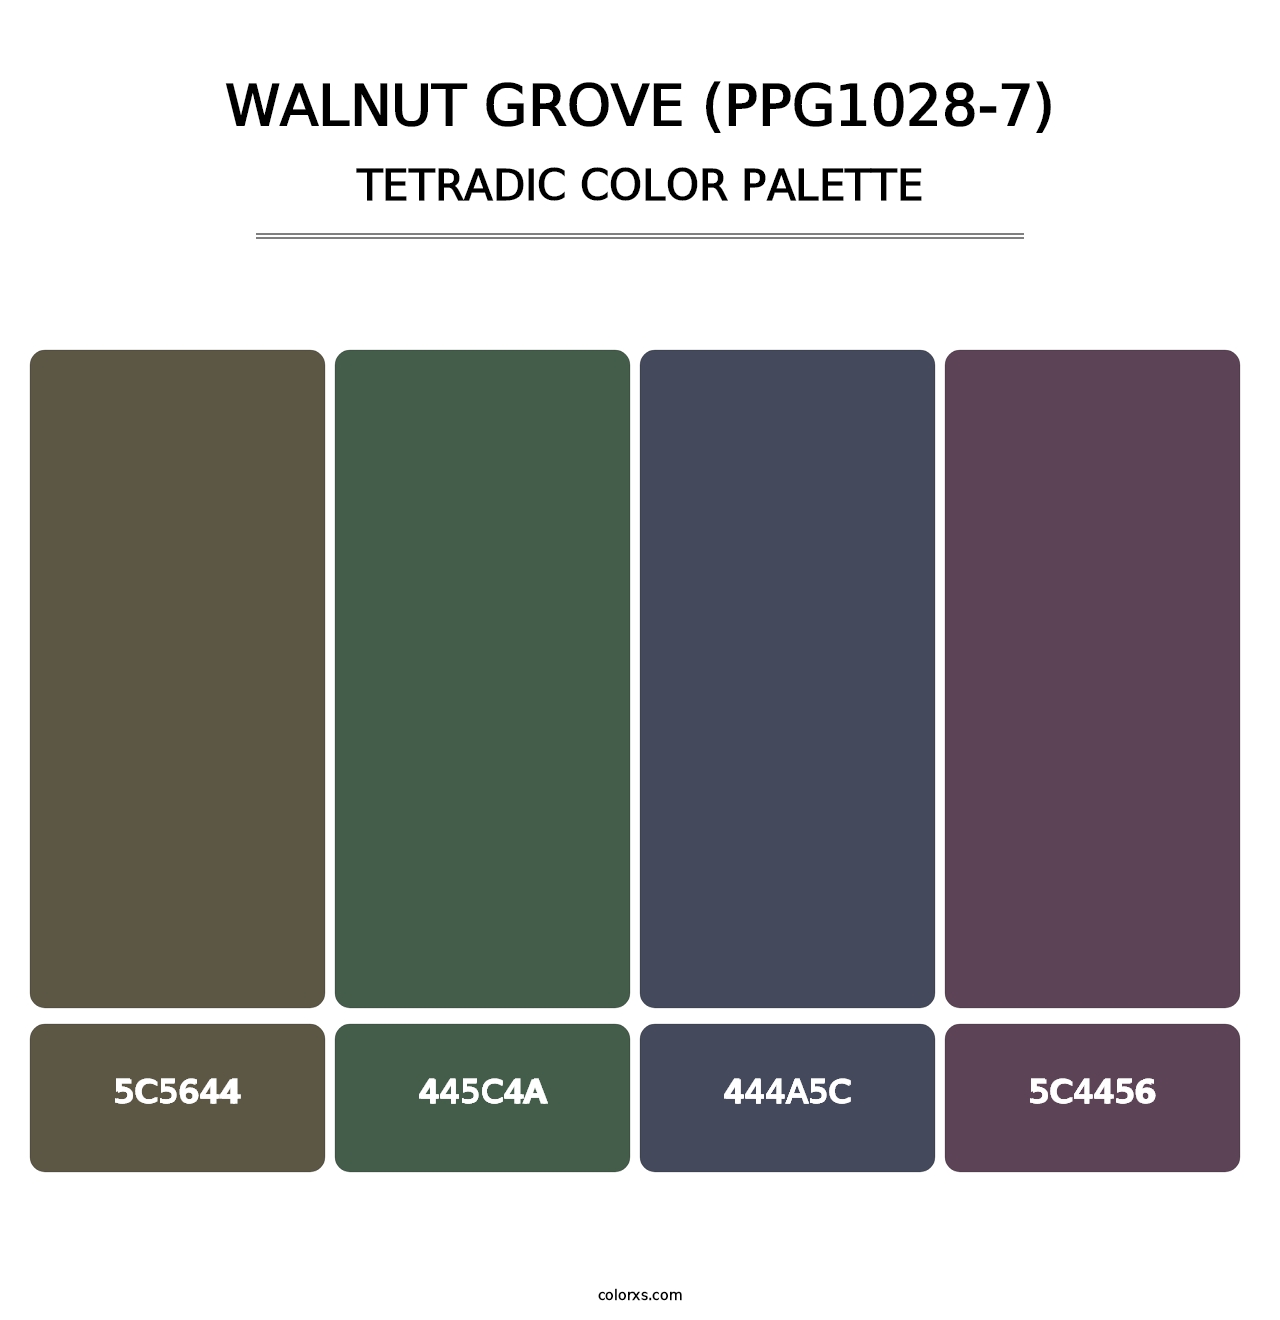 Walnut Grove (PPG1028-7) - Tetradic Color Palette